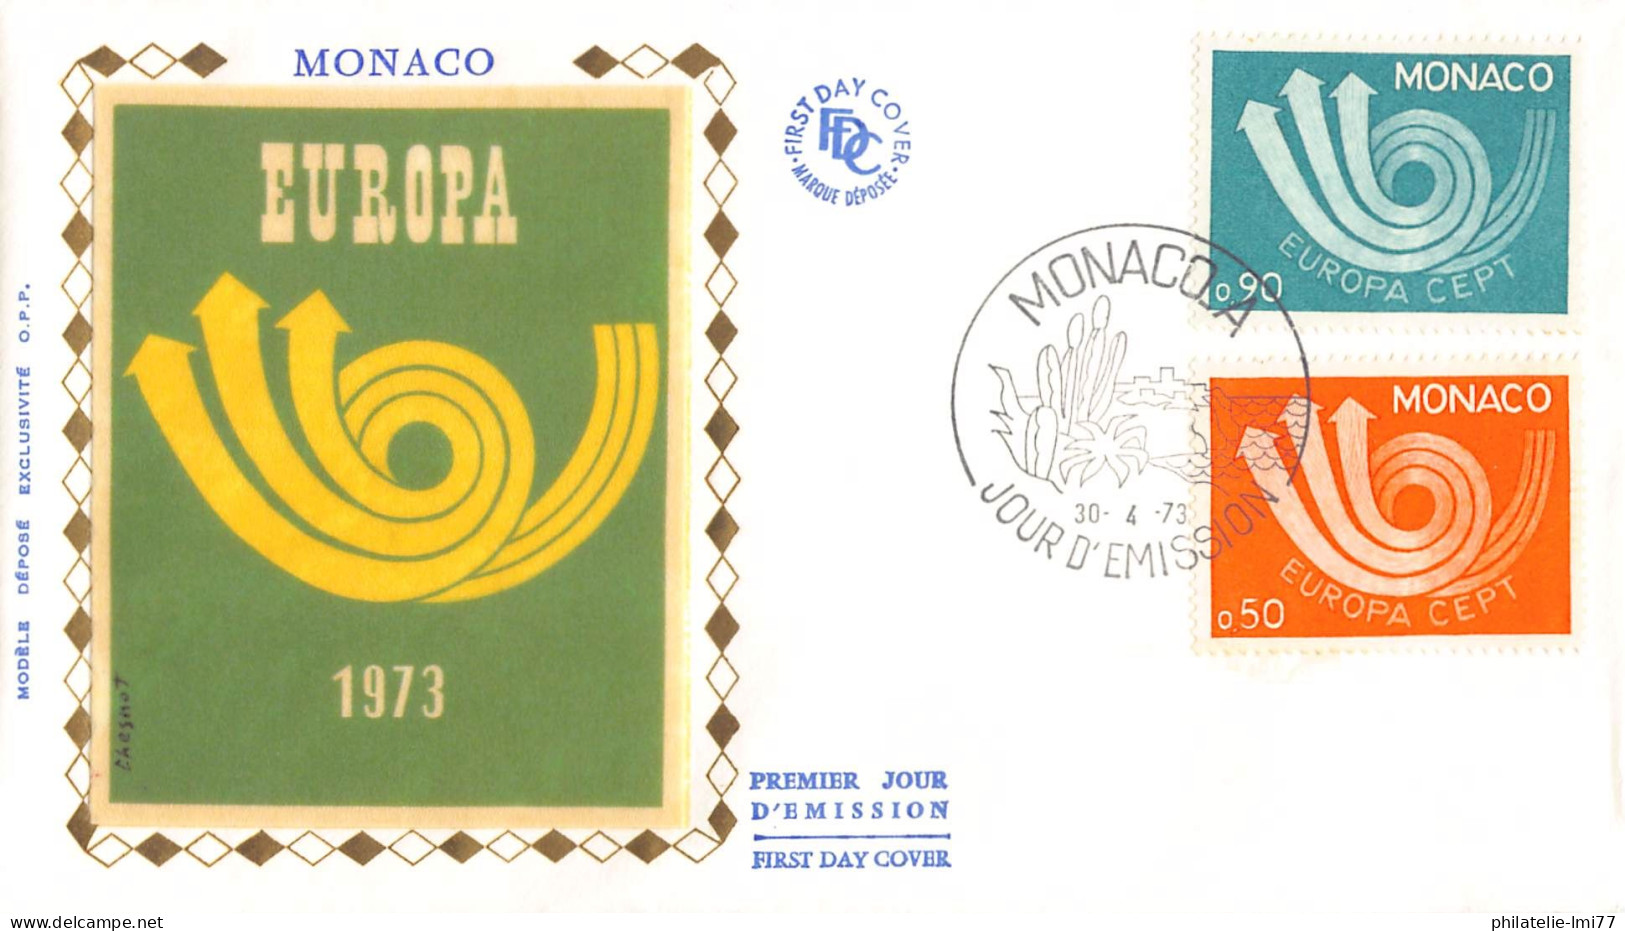 Monaco - FDC Europa 1973 - 1973